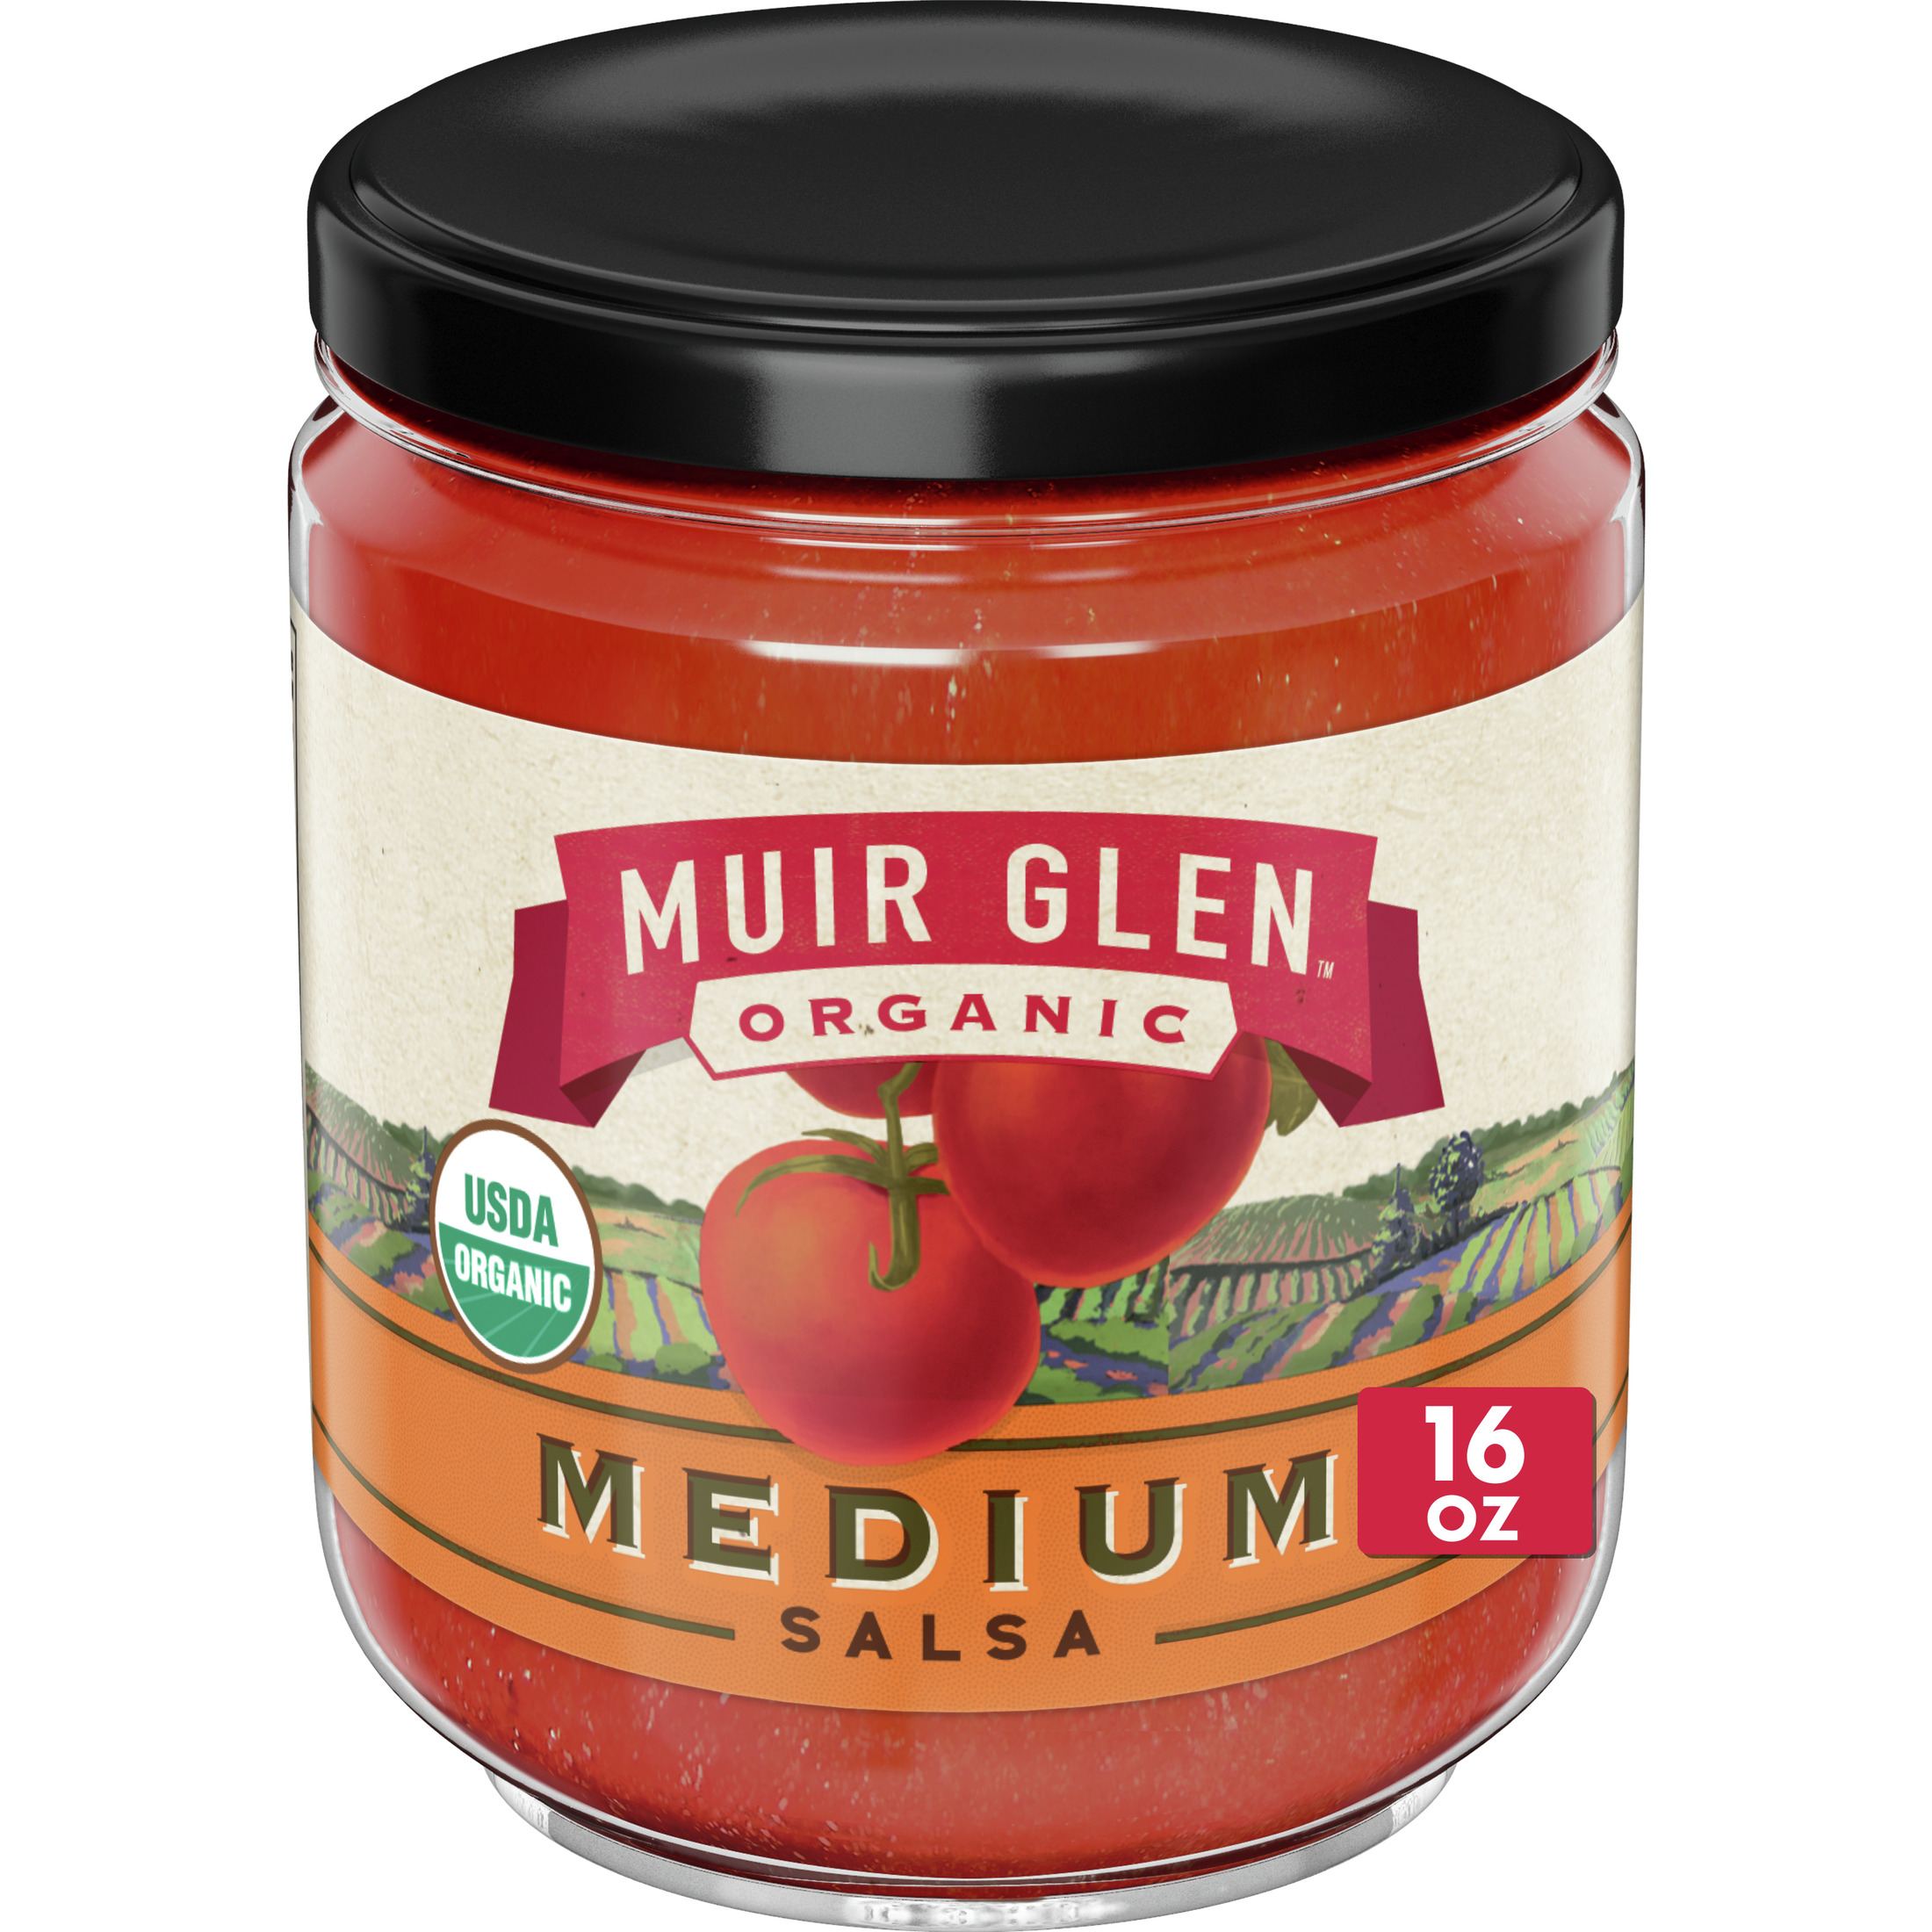 Muir Glen USDA Certified Organic Medium Salsa, 16 oz - image 1 of 6